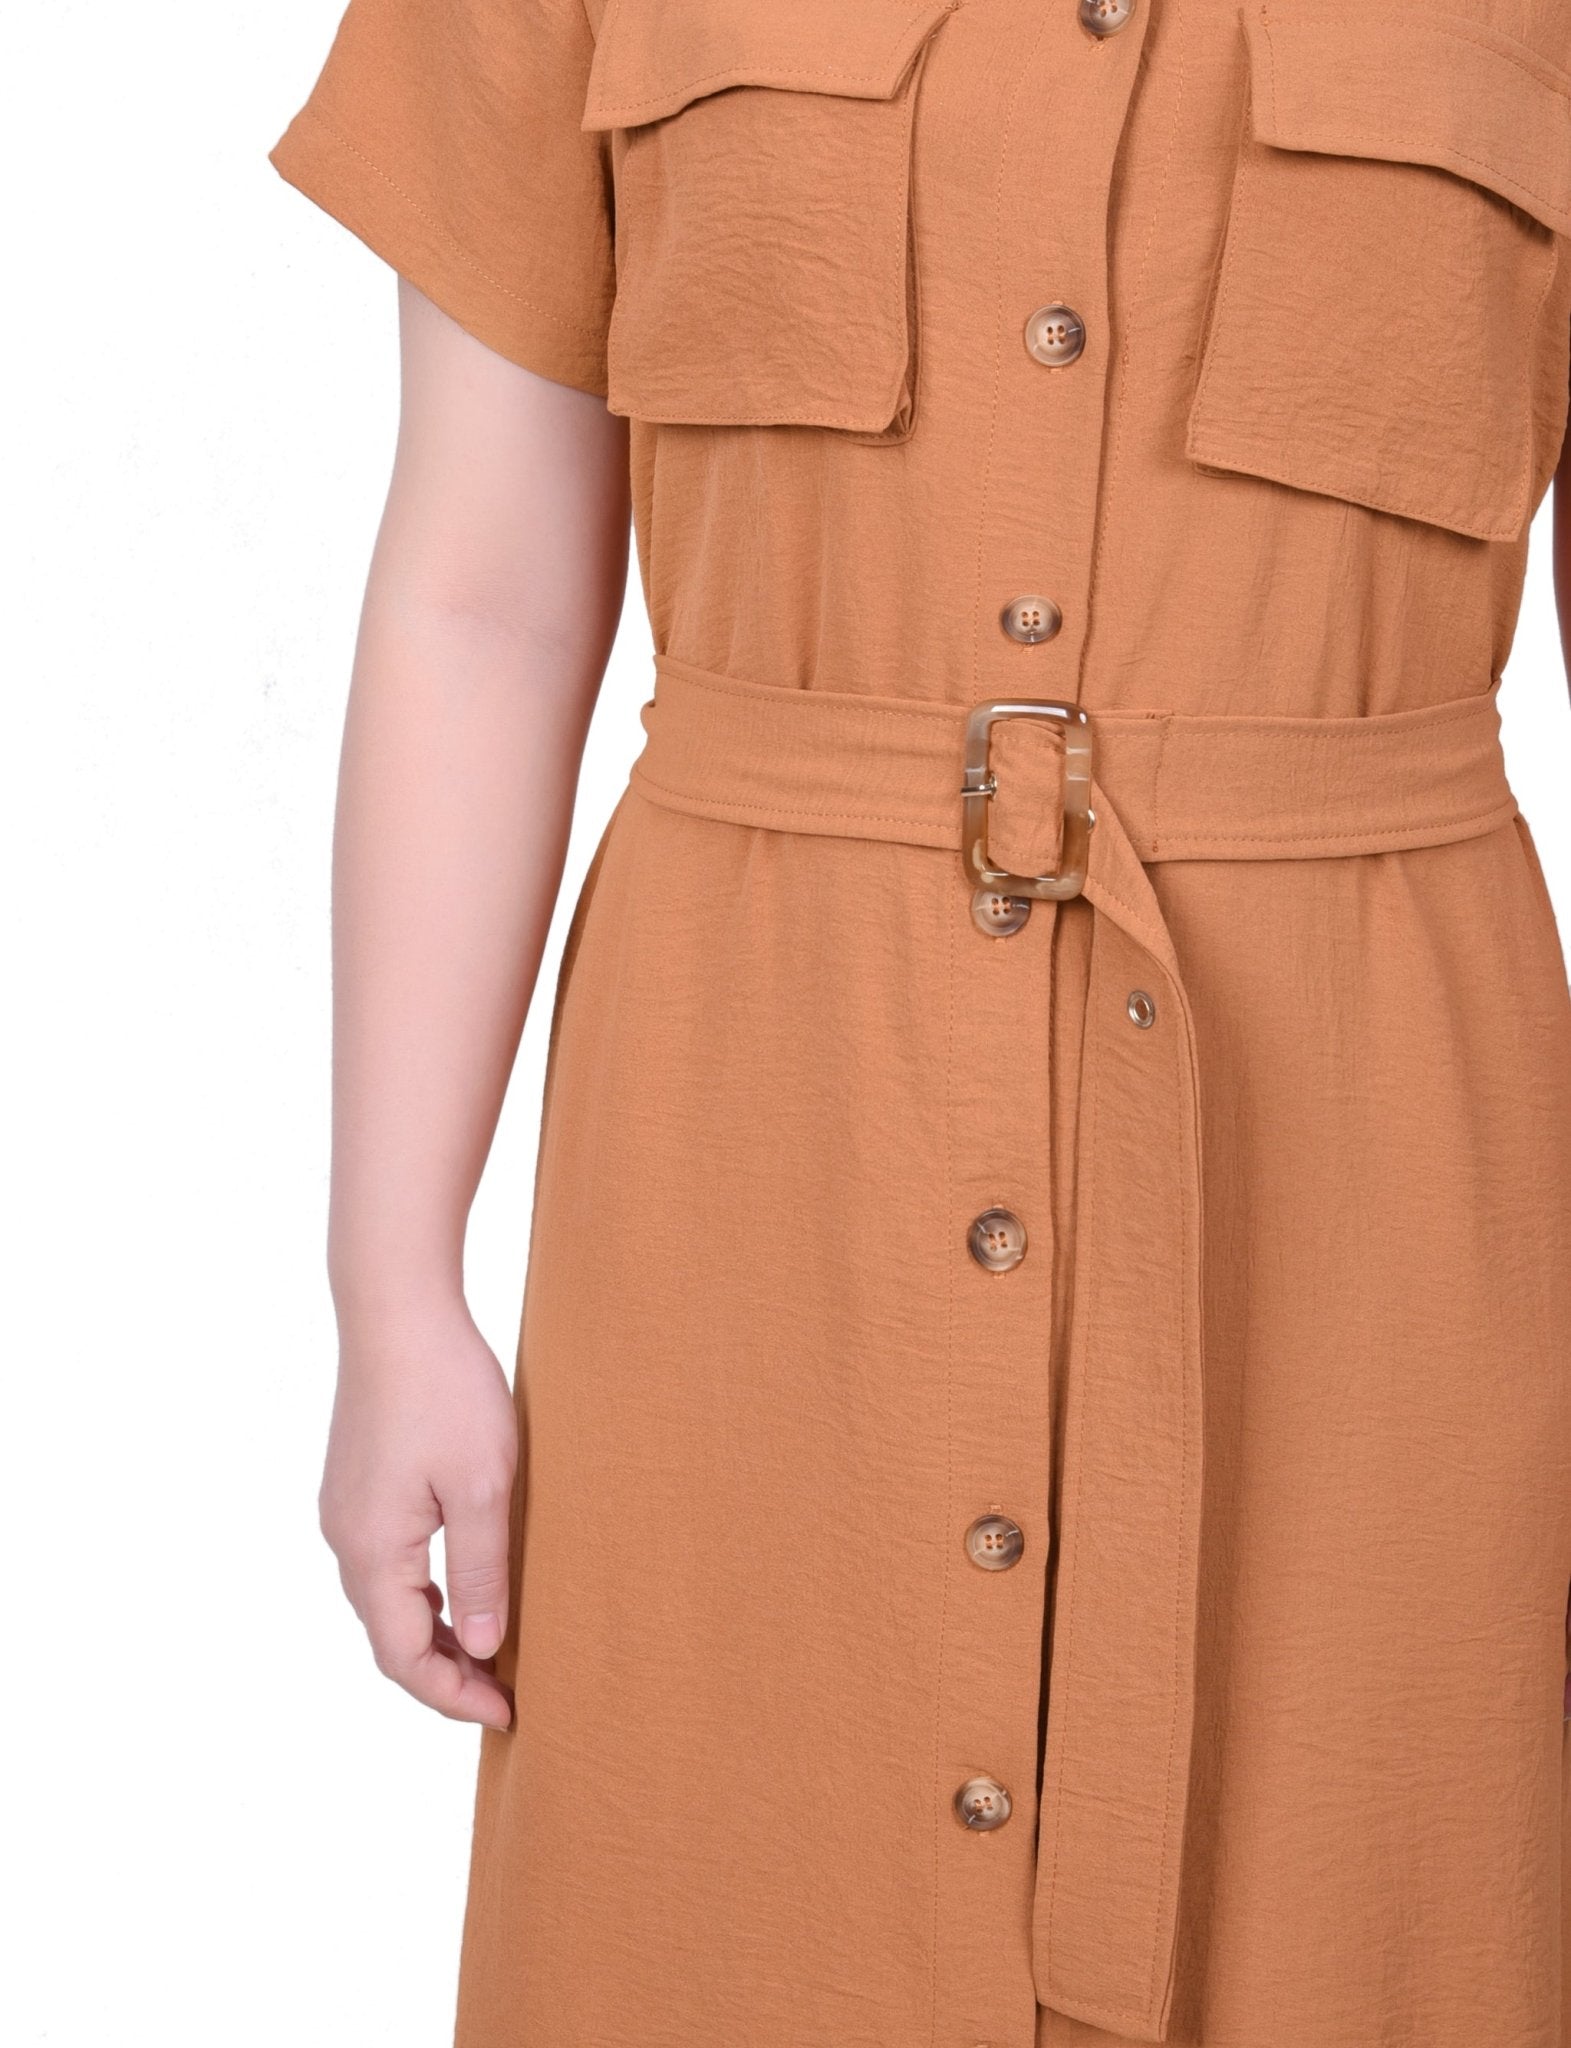 NY Collection Short Sleeve Belted Shirtdress - Petite - DressbarnShirt Dresses